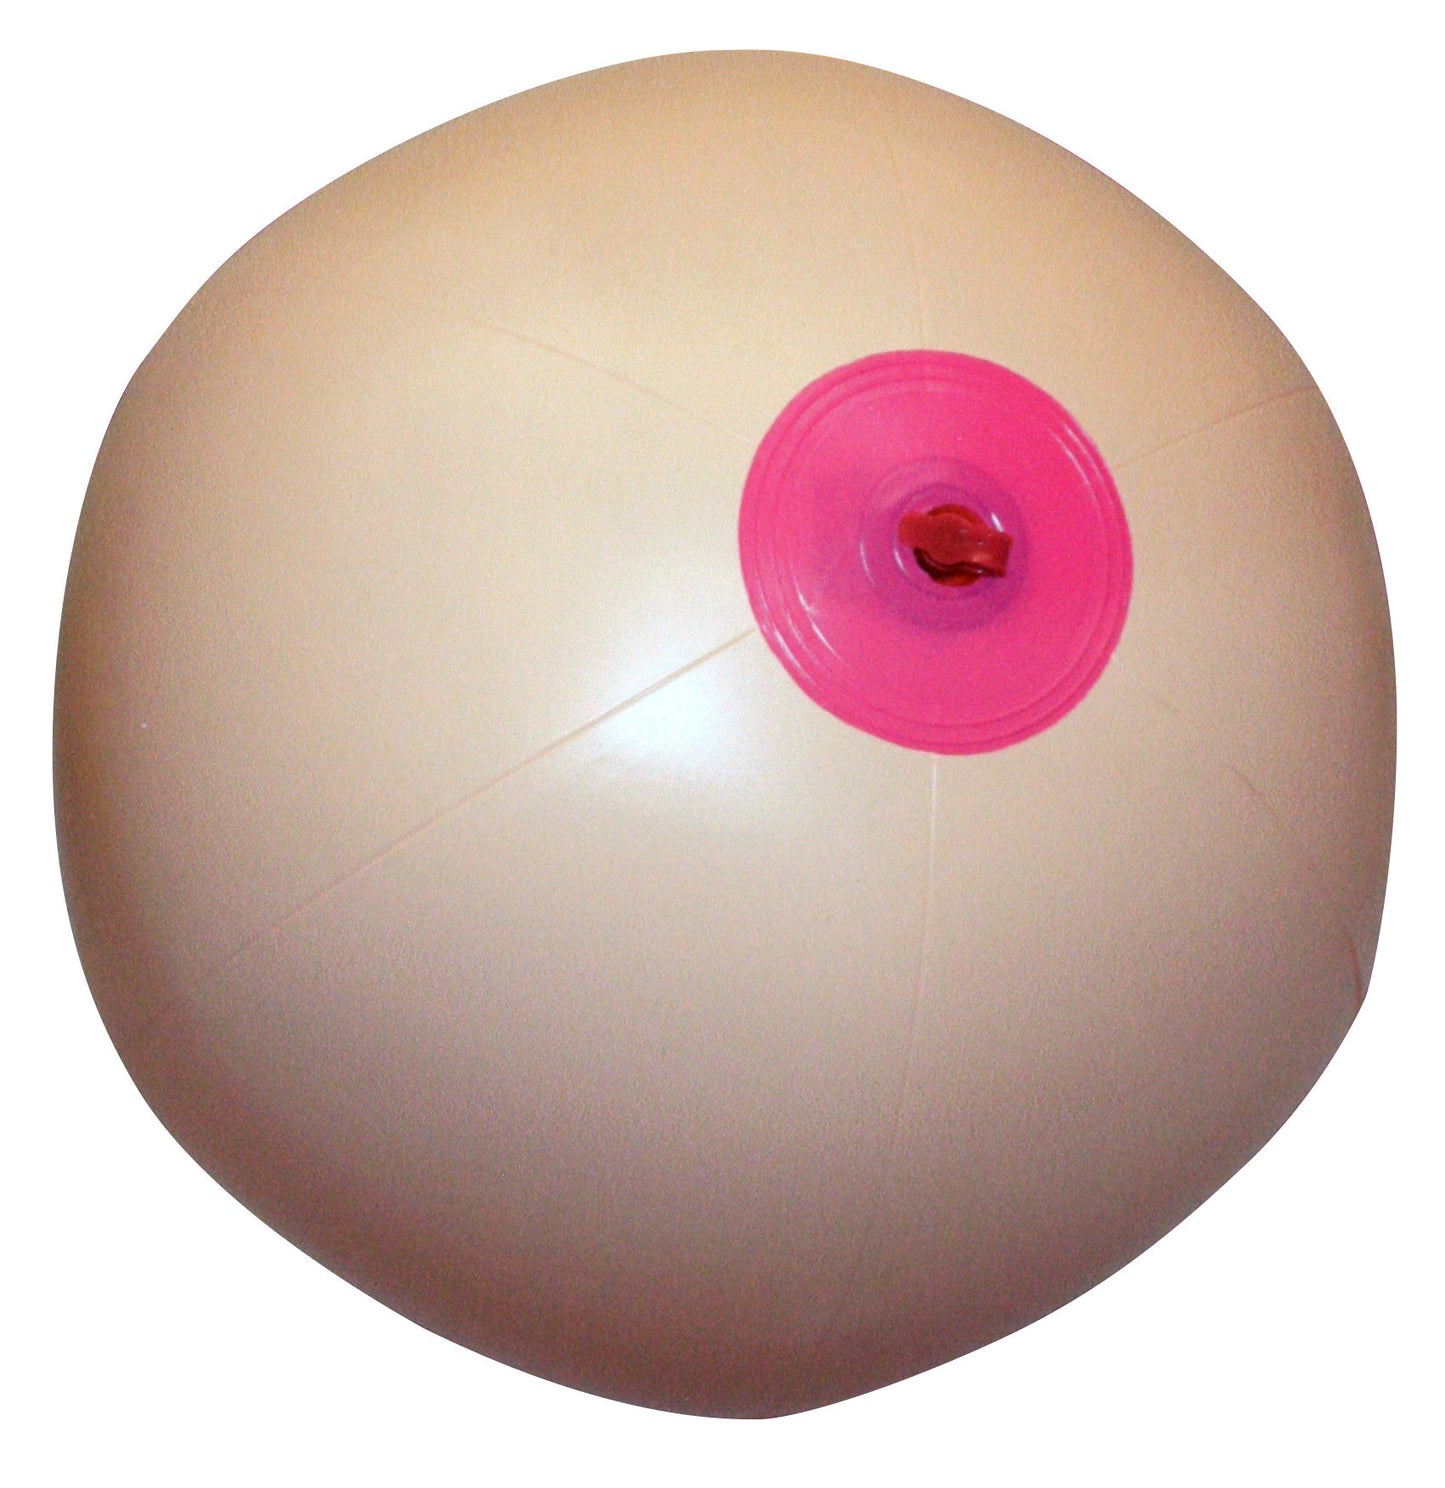 The Big Boob 24" Inflatable Ball